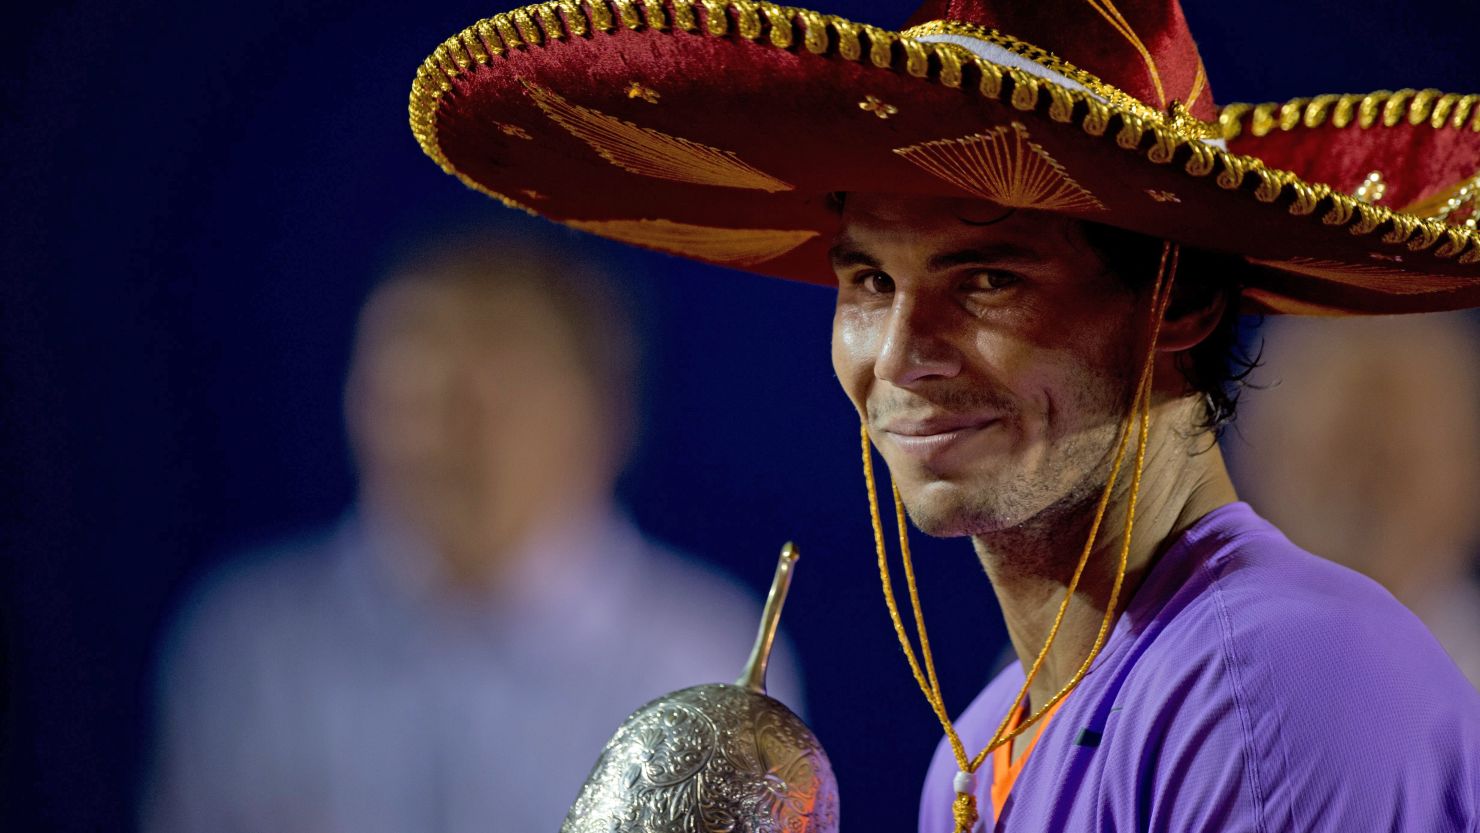 Rafael Nadal defeated fellow Spaniard David Ferrer to win the Mexican Open